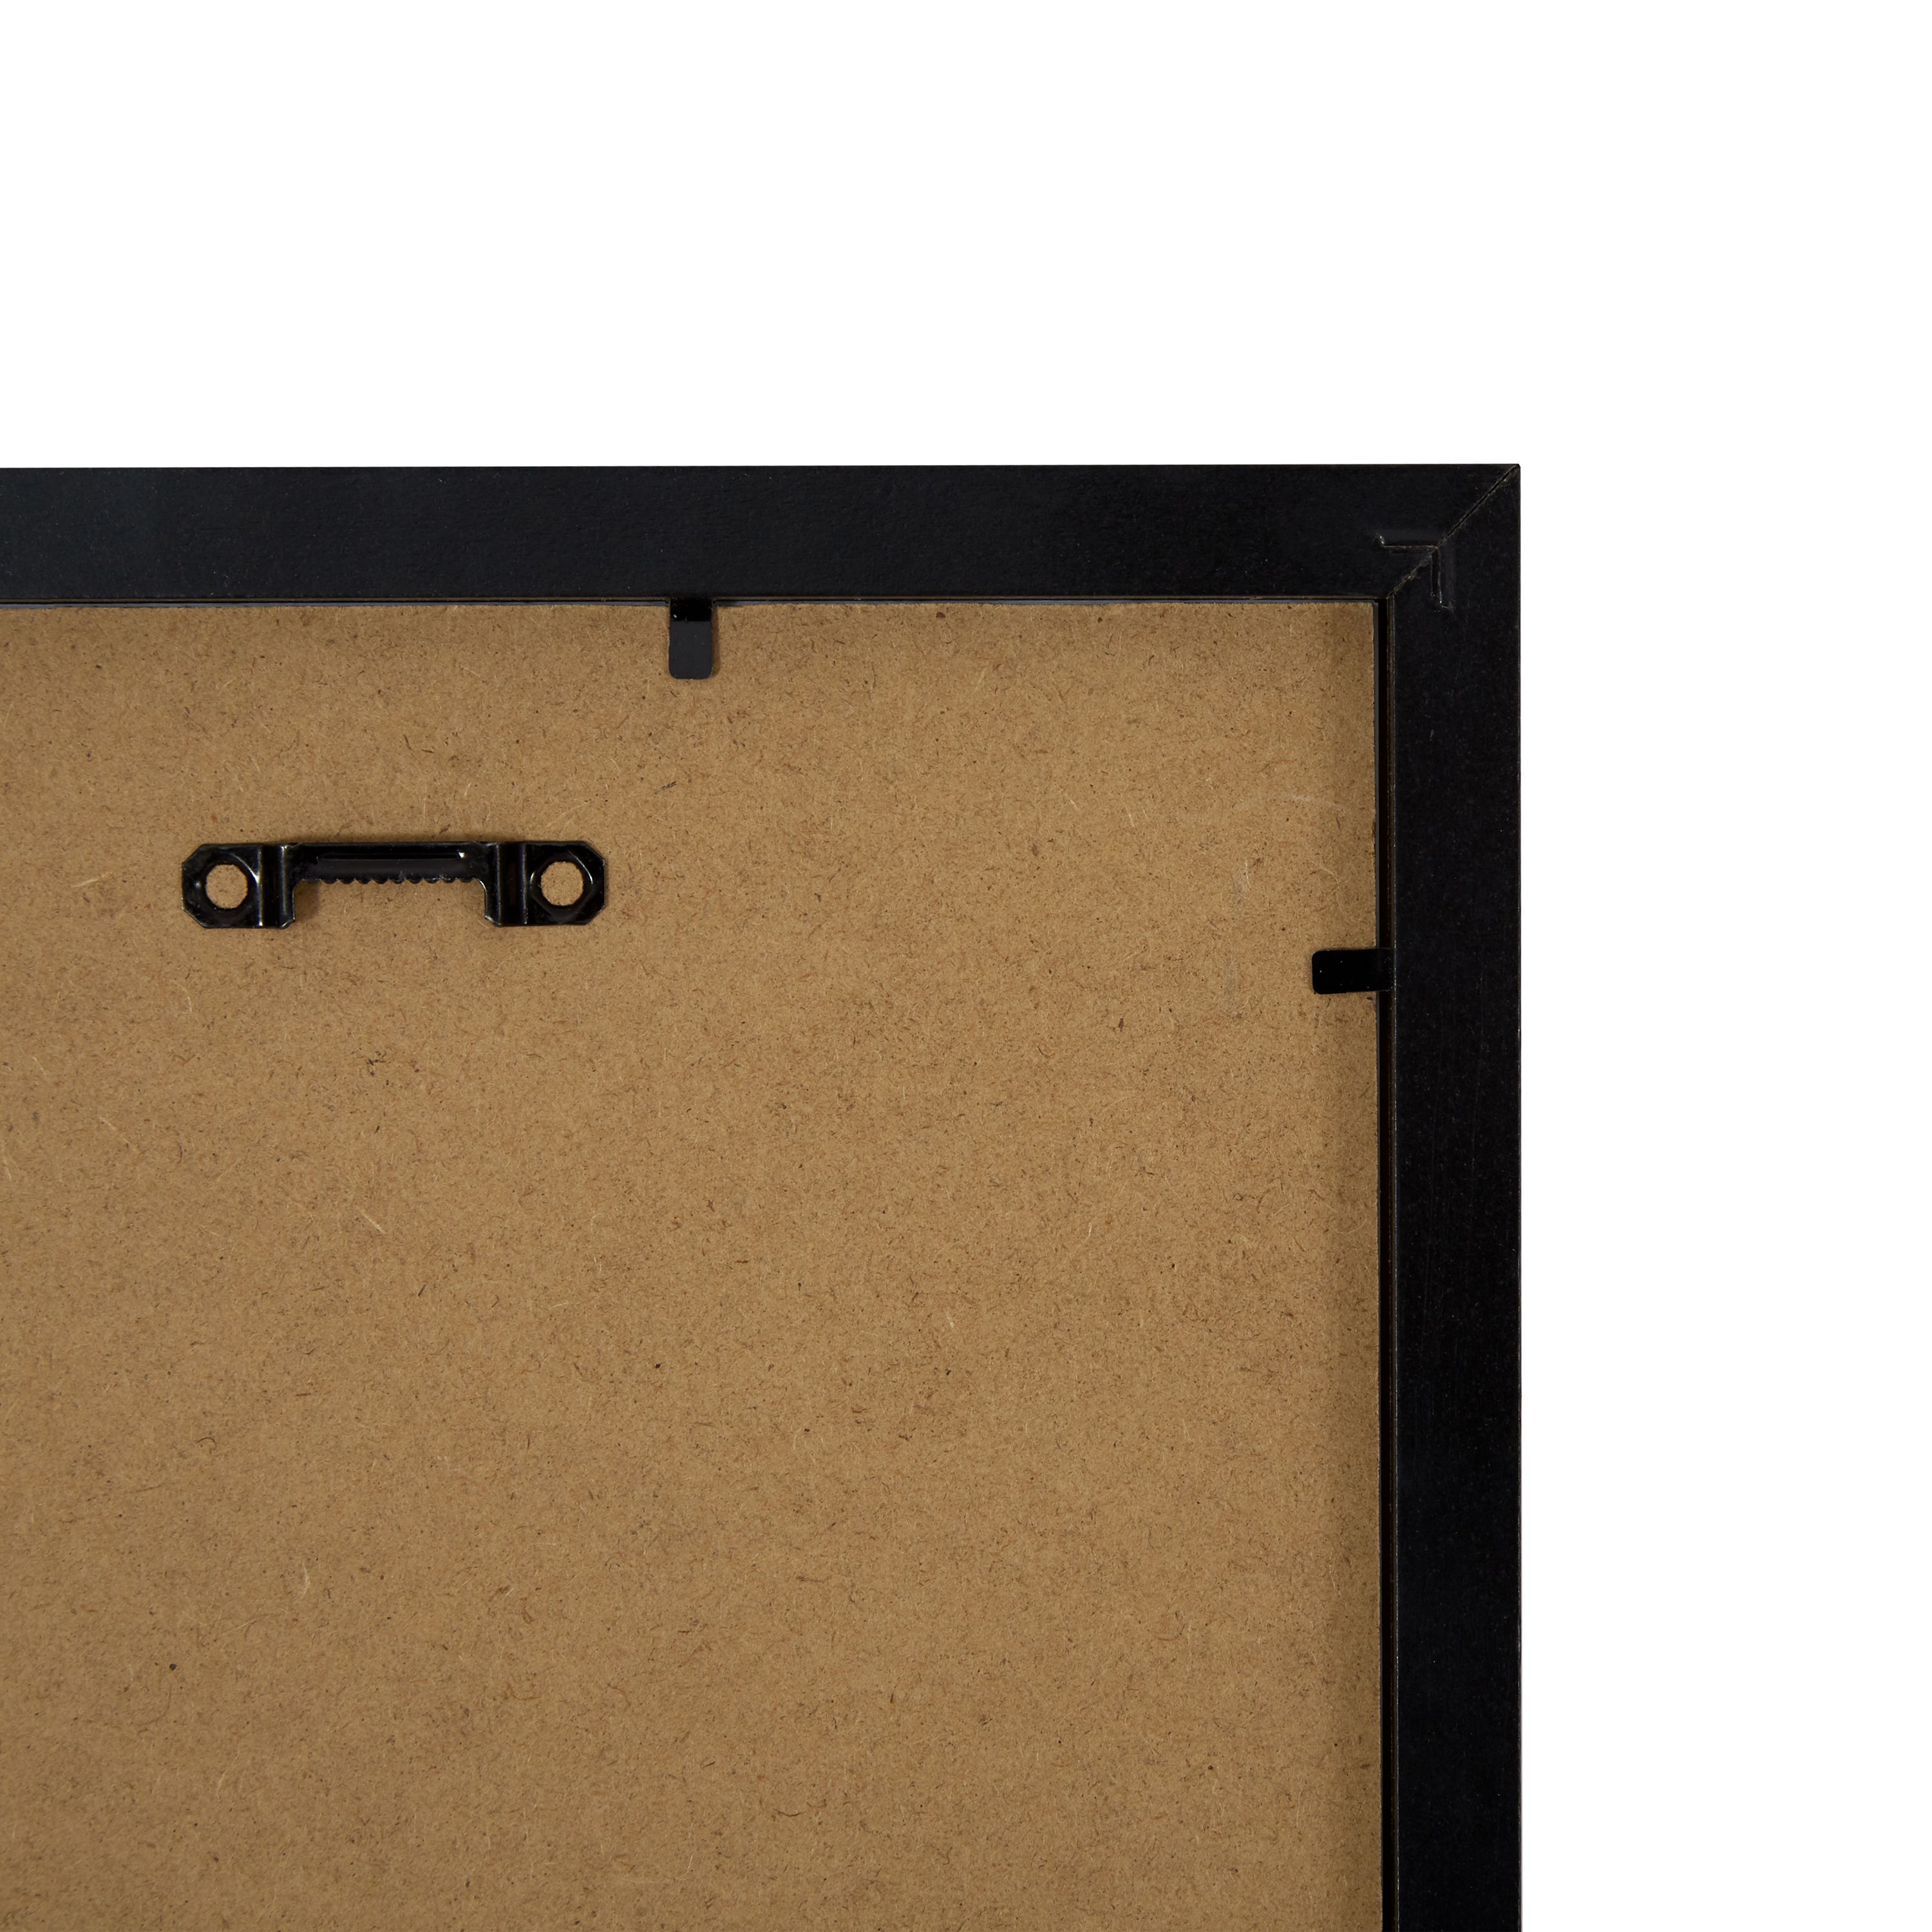 Matt Black Pine effect Plain Single Picture frame (H)27.6cm x (W)22.6cm